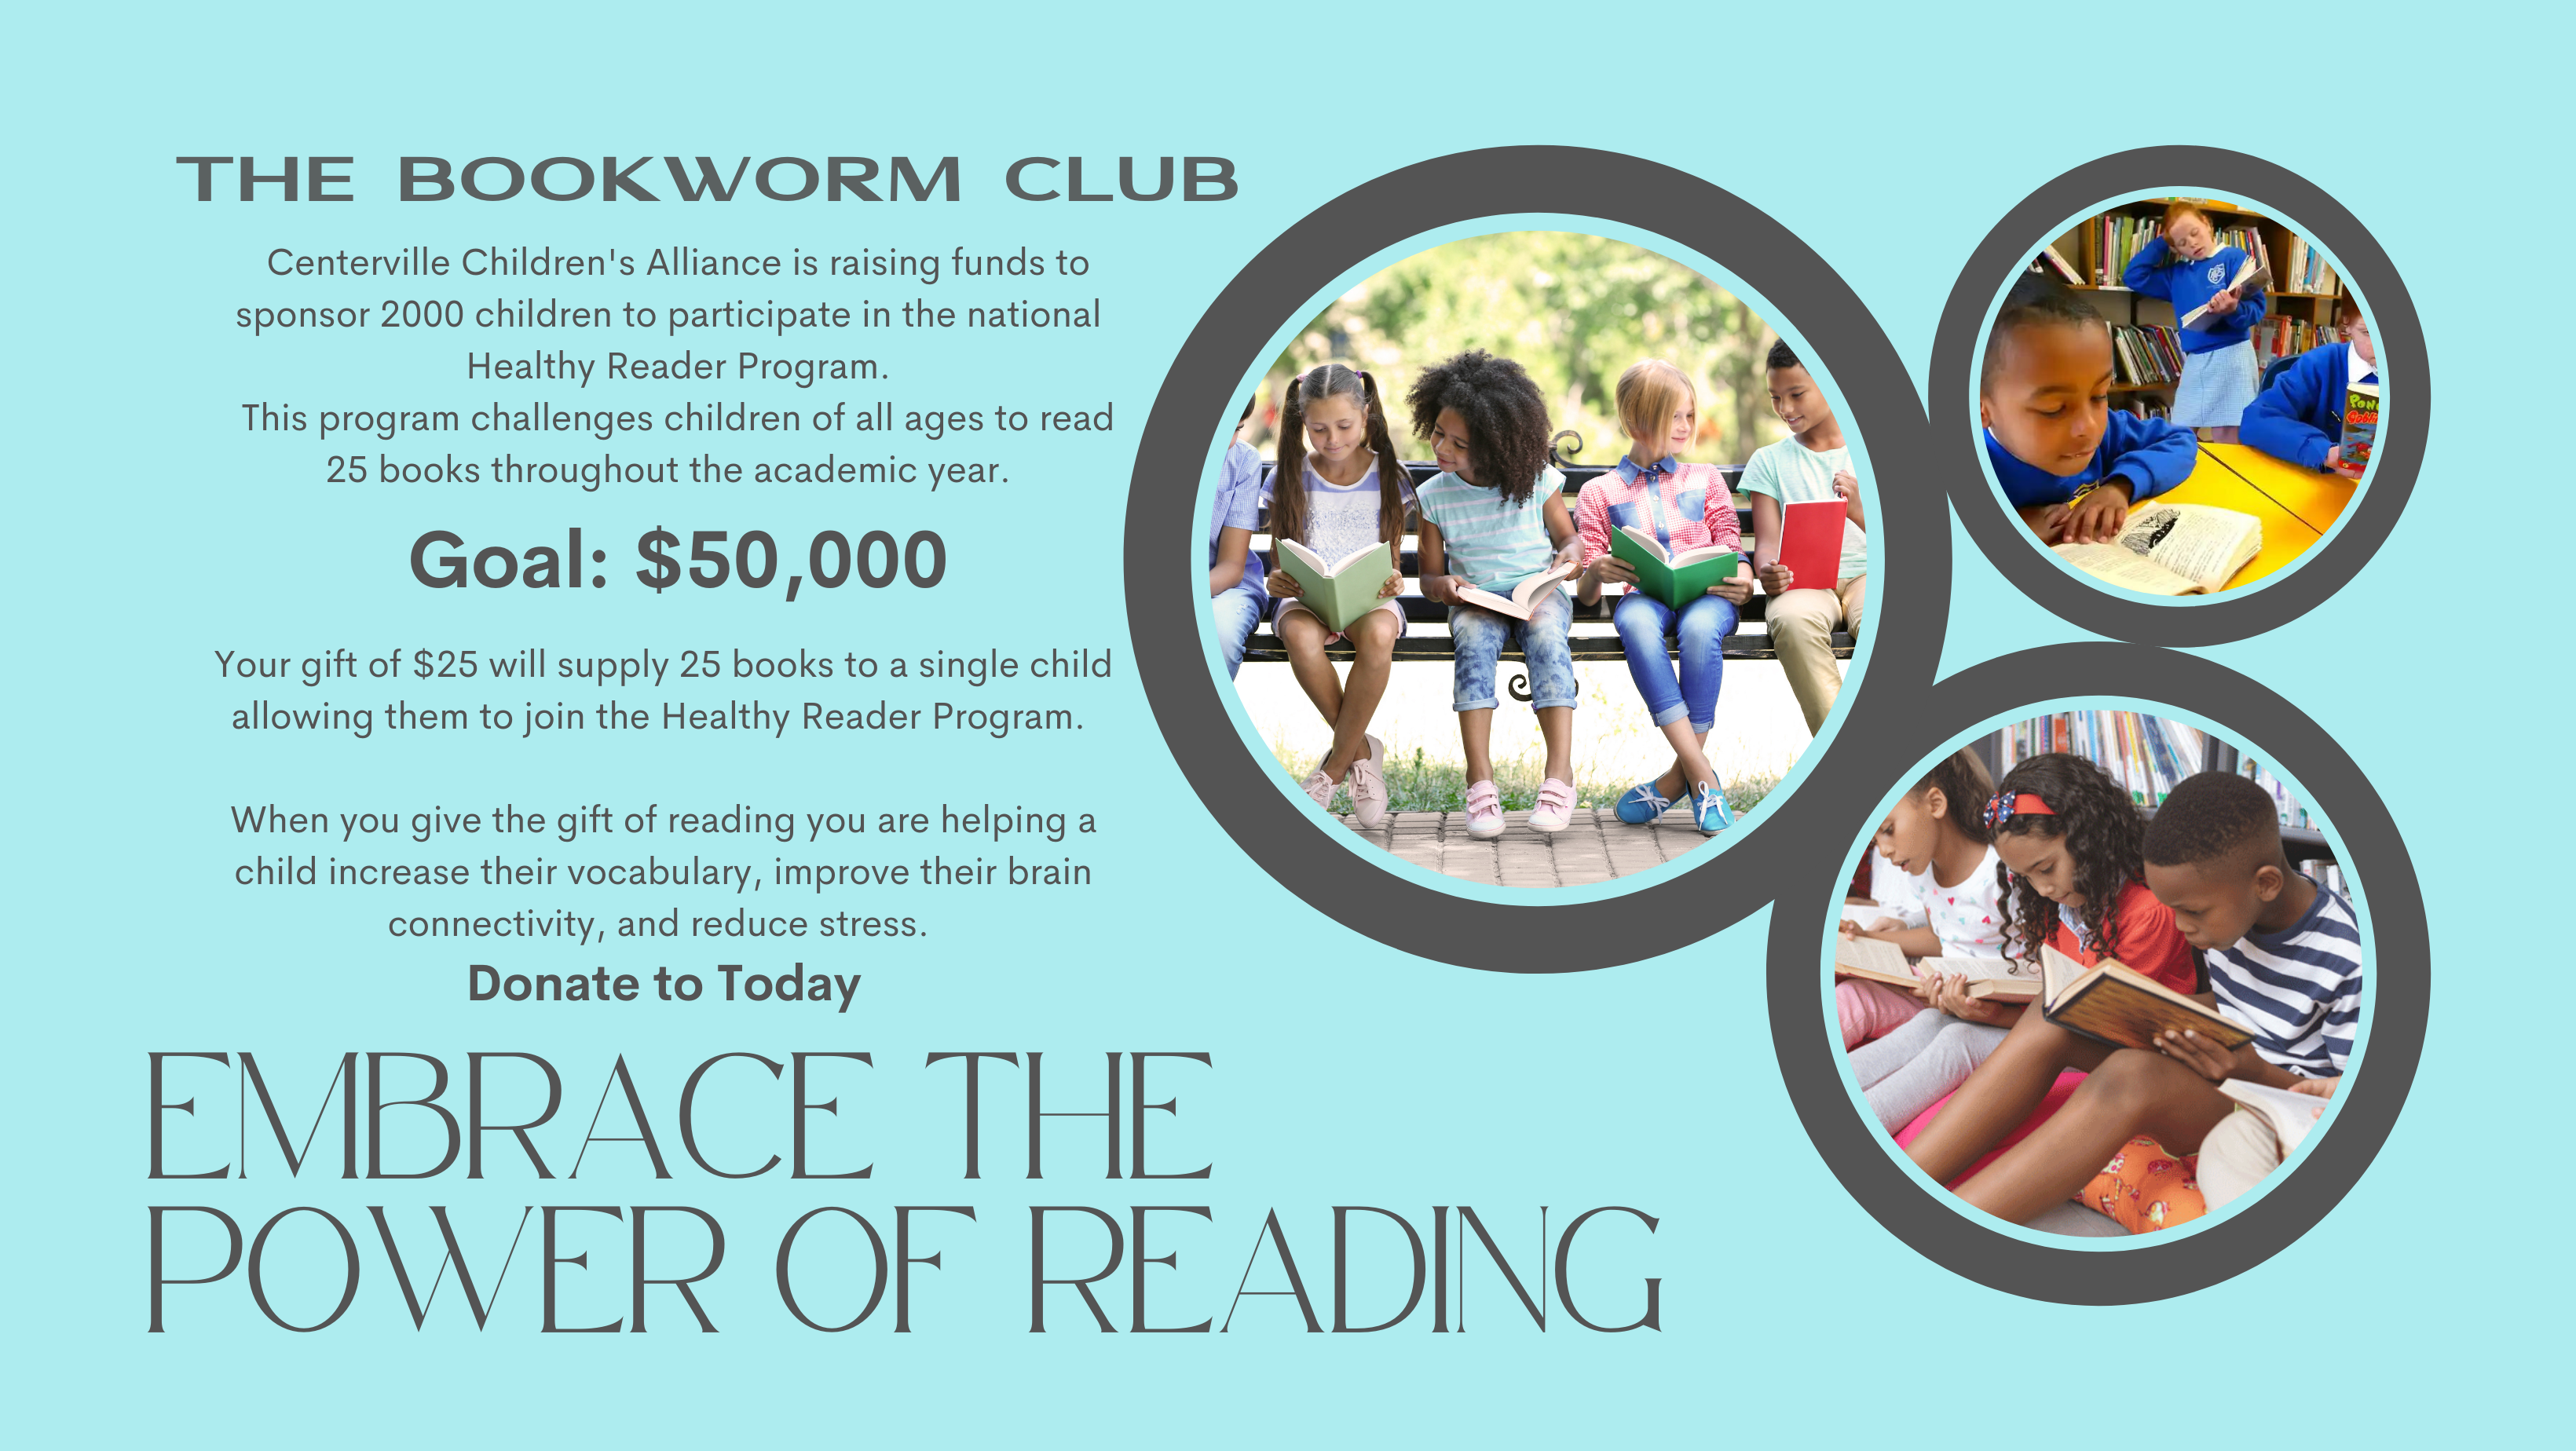 The Bookworm Club